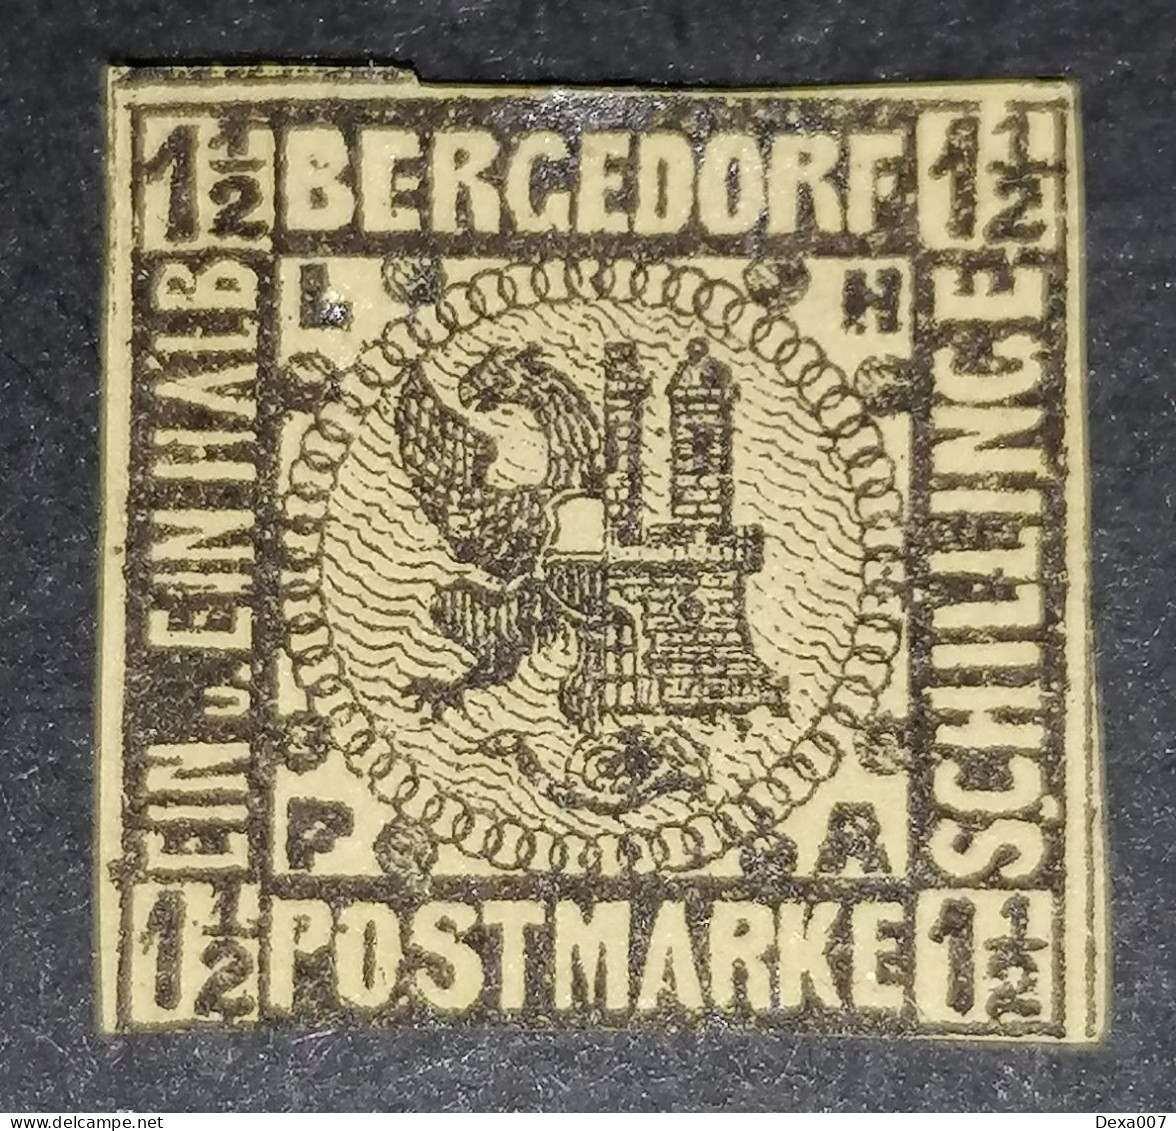 Old Germany,  Bergedorf 1  1/2 Sch 1861 Michel 3 Mint OG - Bergedorf